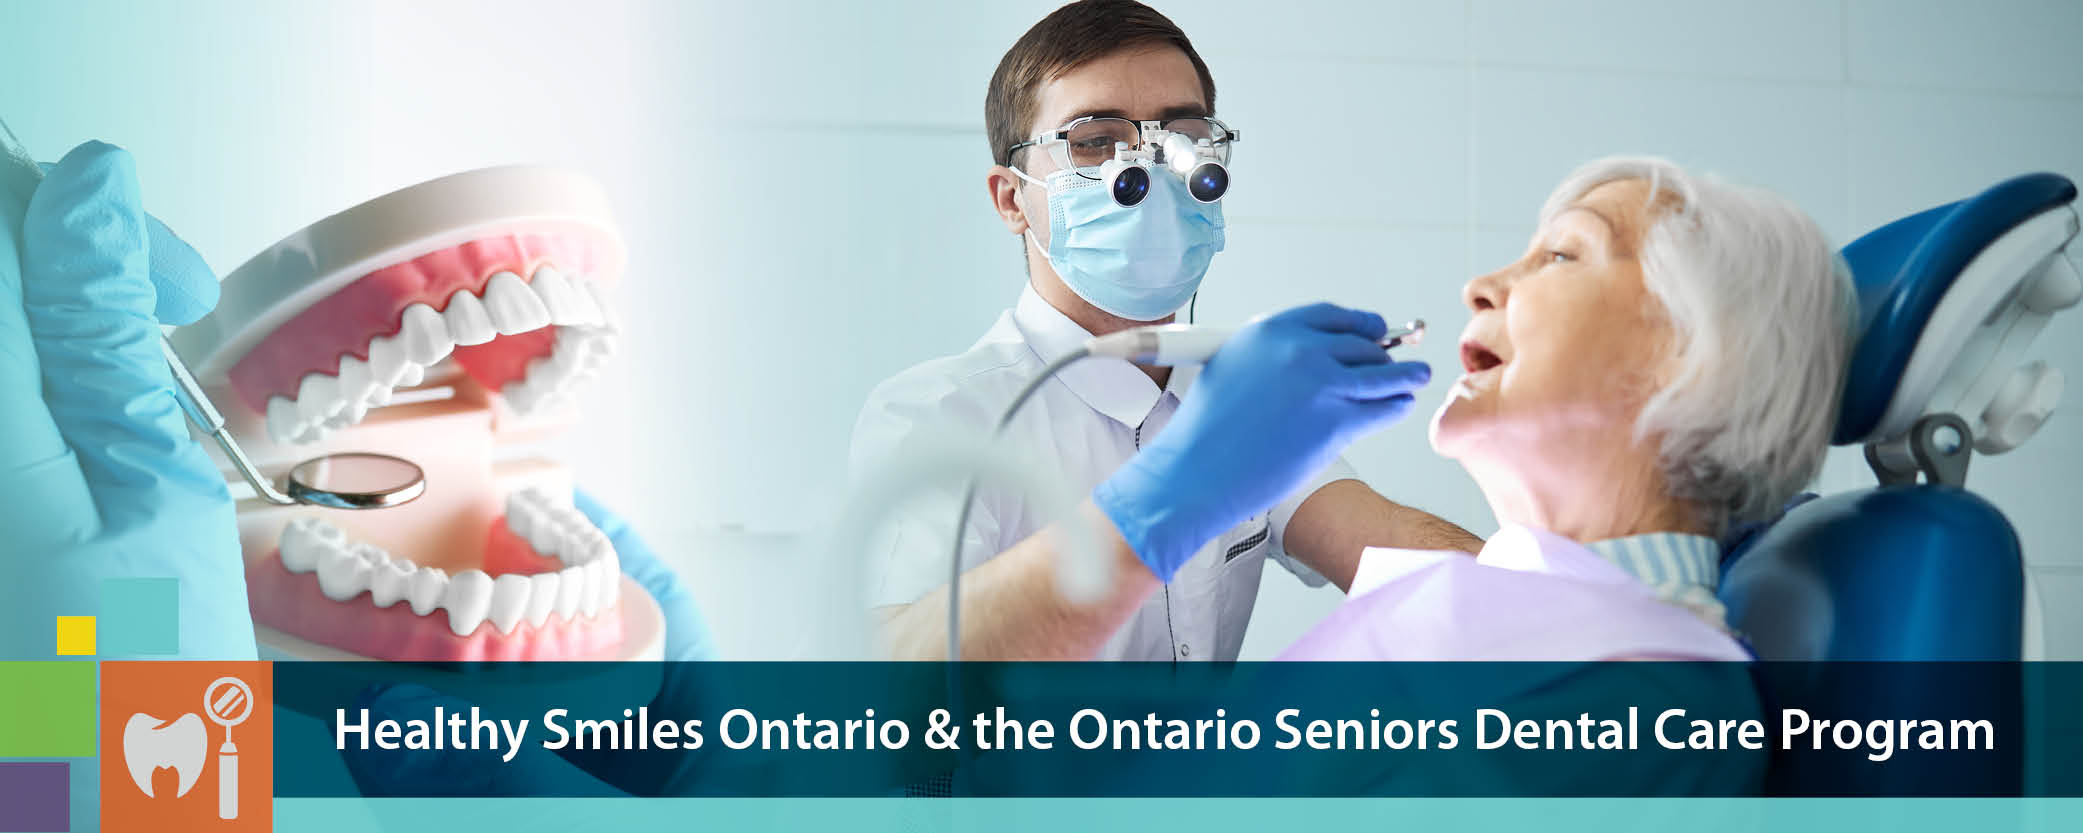 Annual report section banner - Healthy Smiles Ontario & the Ontario Seniors Dental Care Program